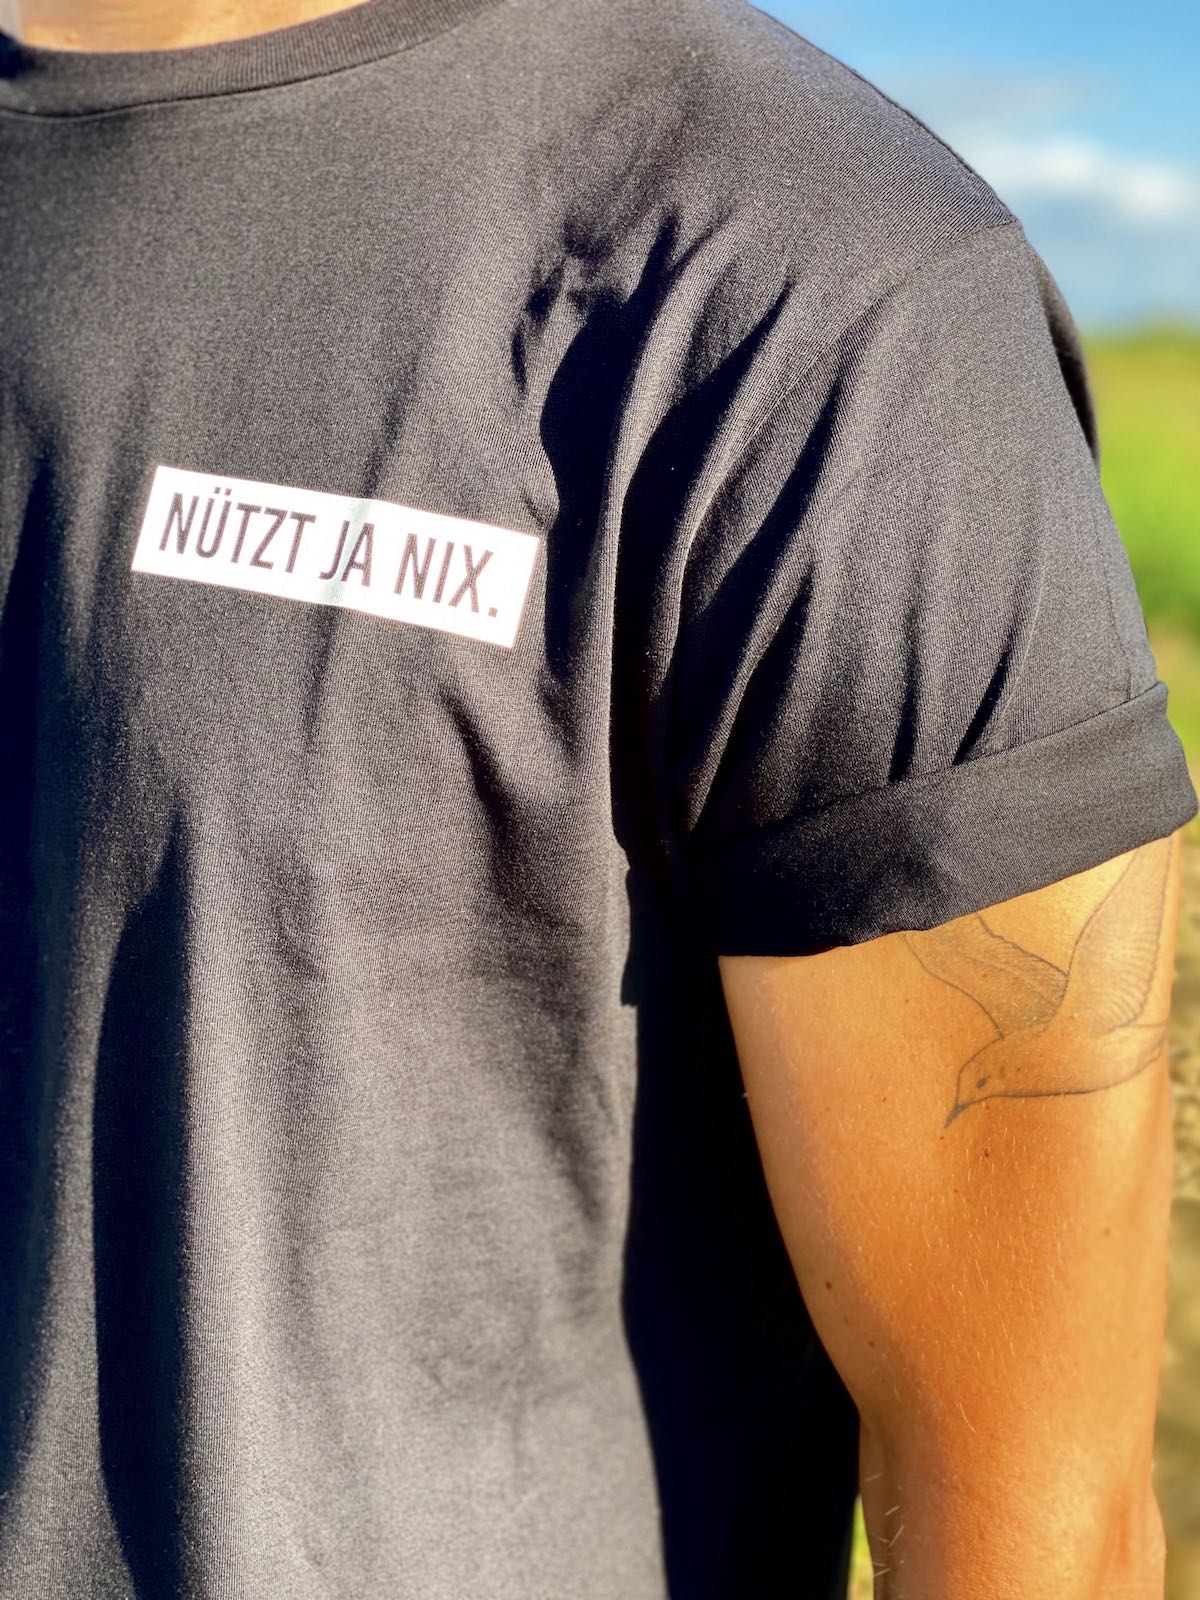 Schwarzes Herren T-Shirt mit "Nützt ja nix" Logo